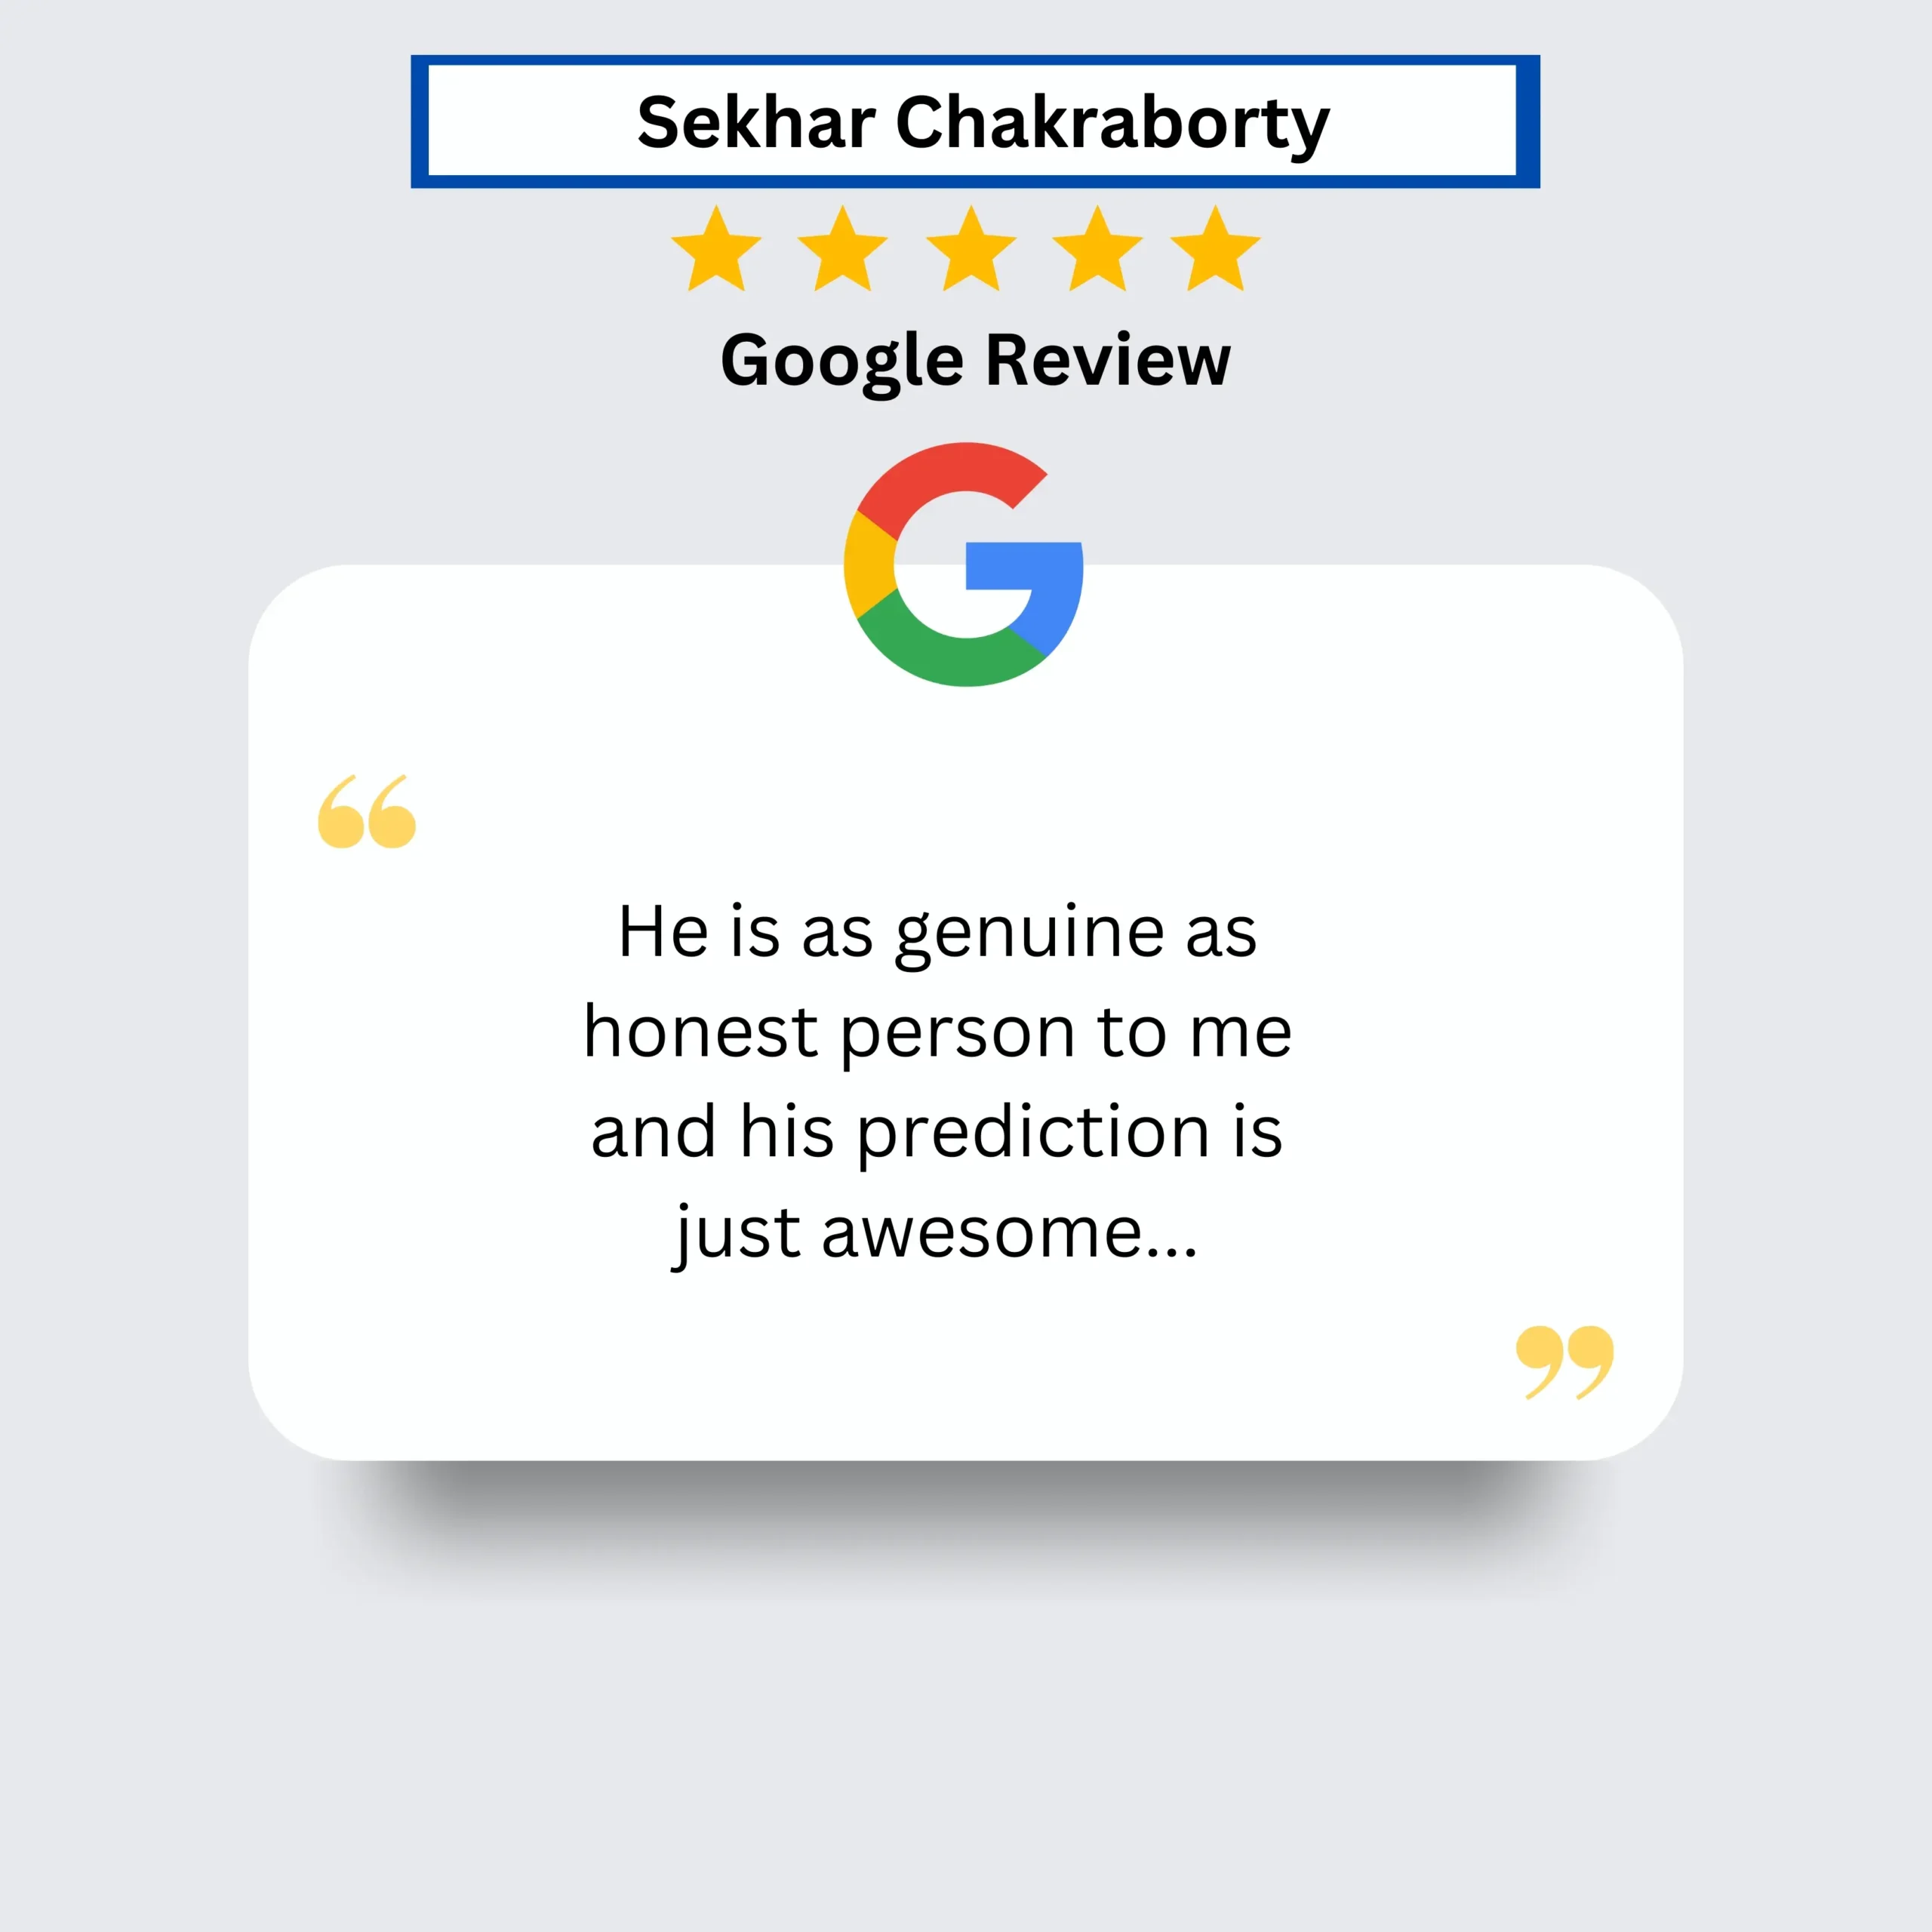 Sekhar Chakraborty